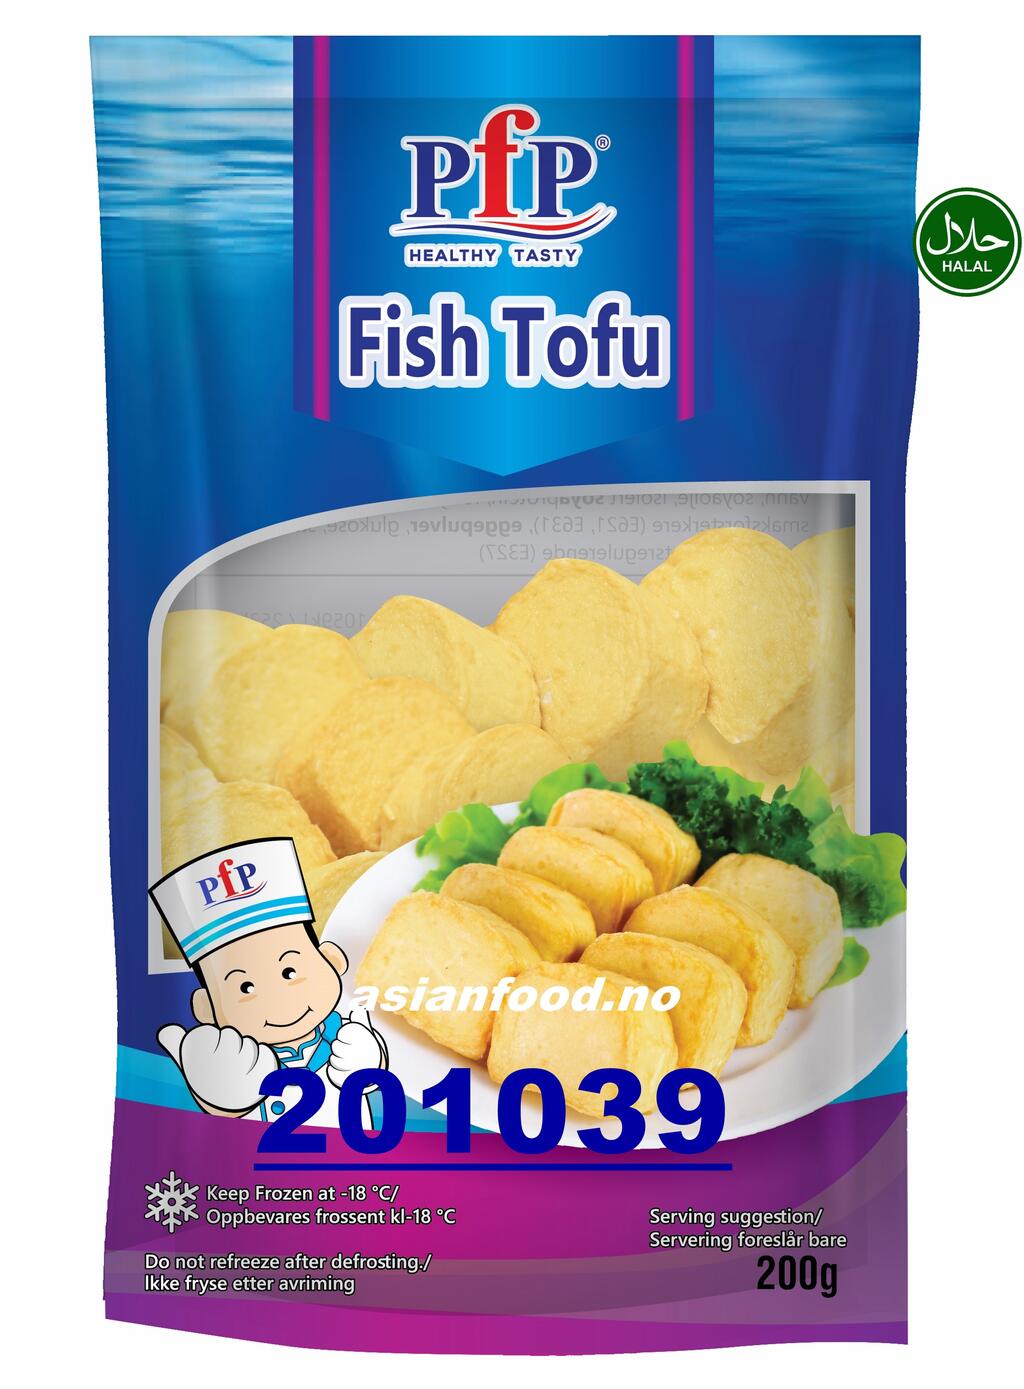 PFP Fish tofu (frozen) 30x200g Ca tofu TH - Asian Food Import AS